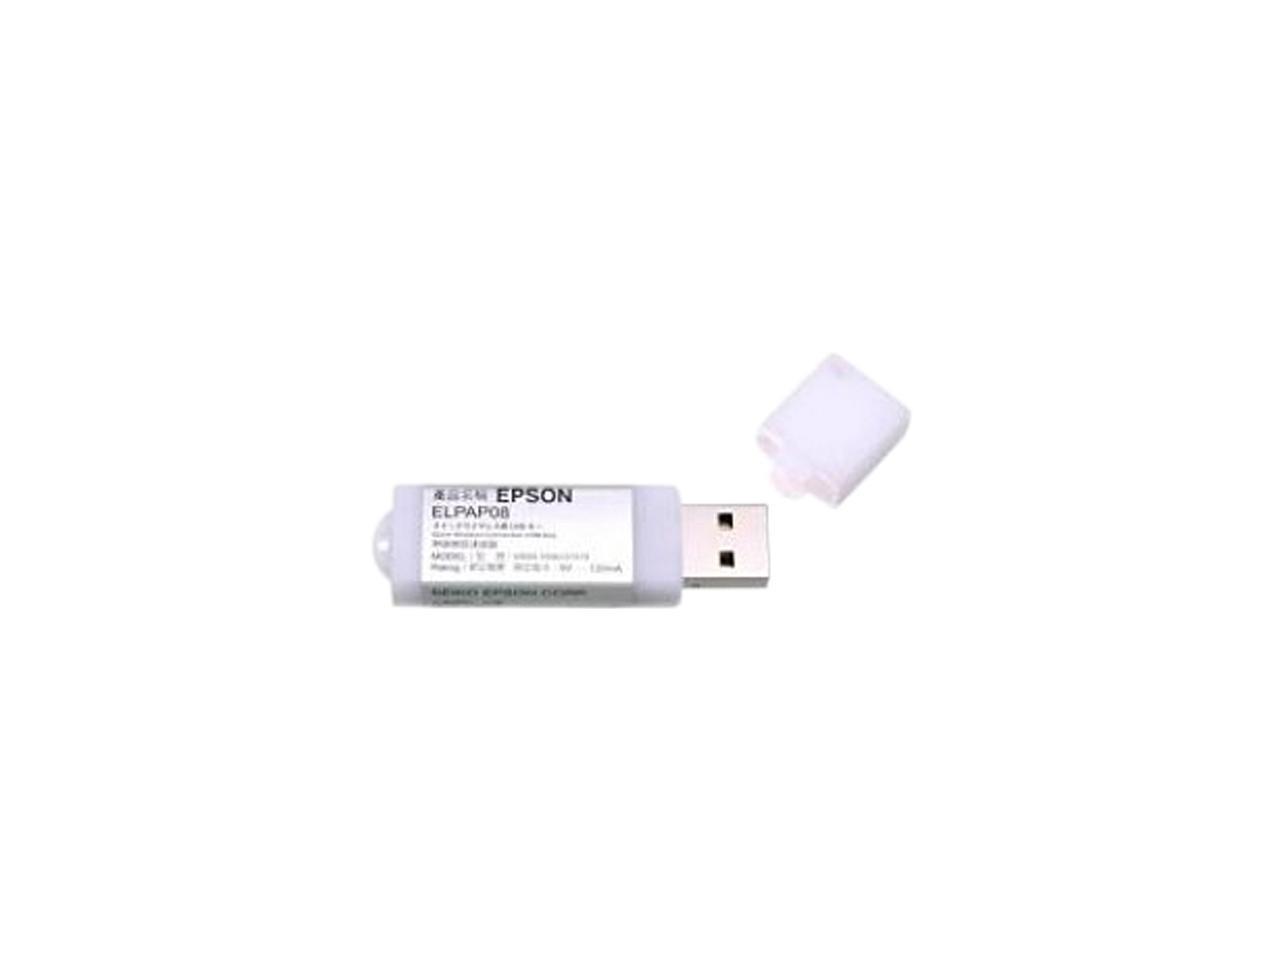 Epson Quick Wireless Connection USB Key (ELPAP09)